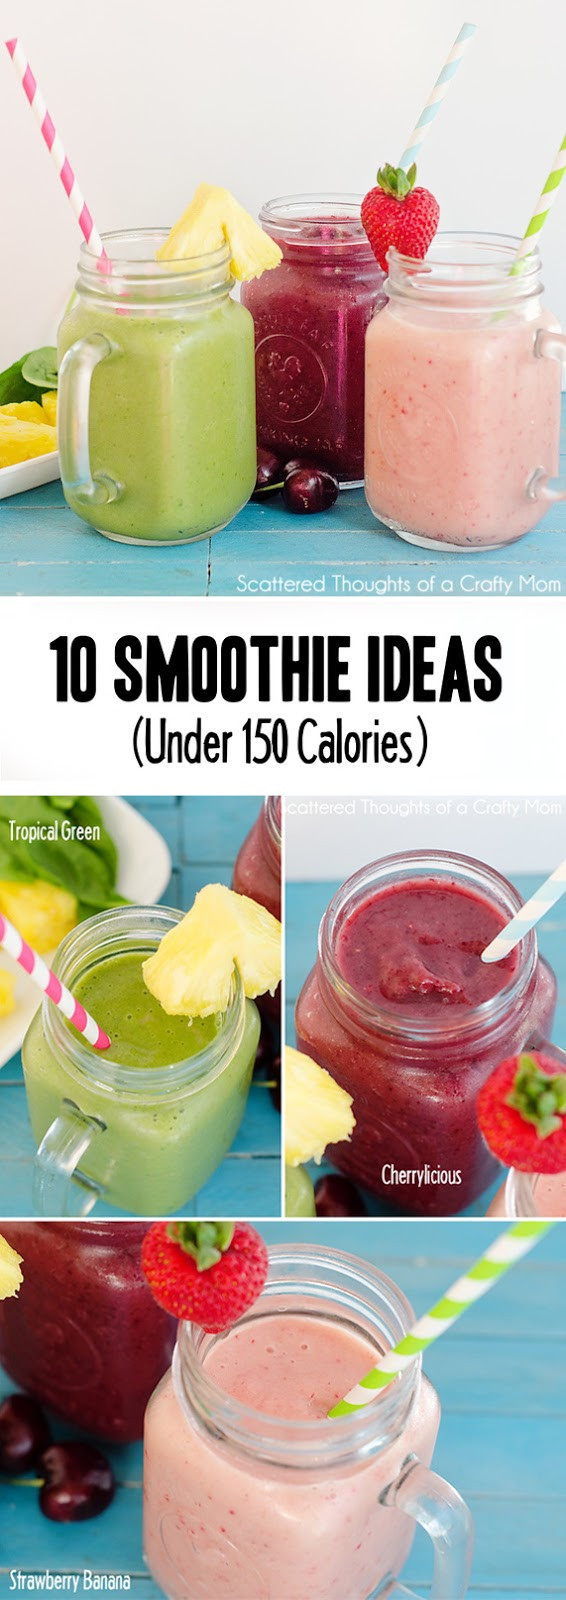 Low Calorie Smoothies
 10 Smoothie Ideas under 150 calories